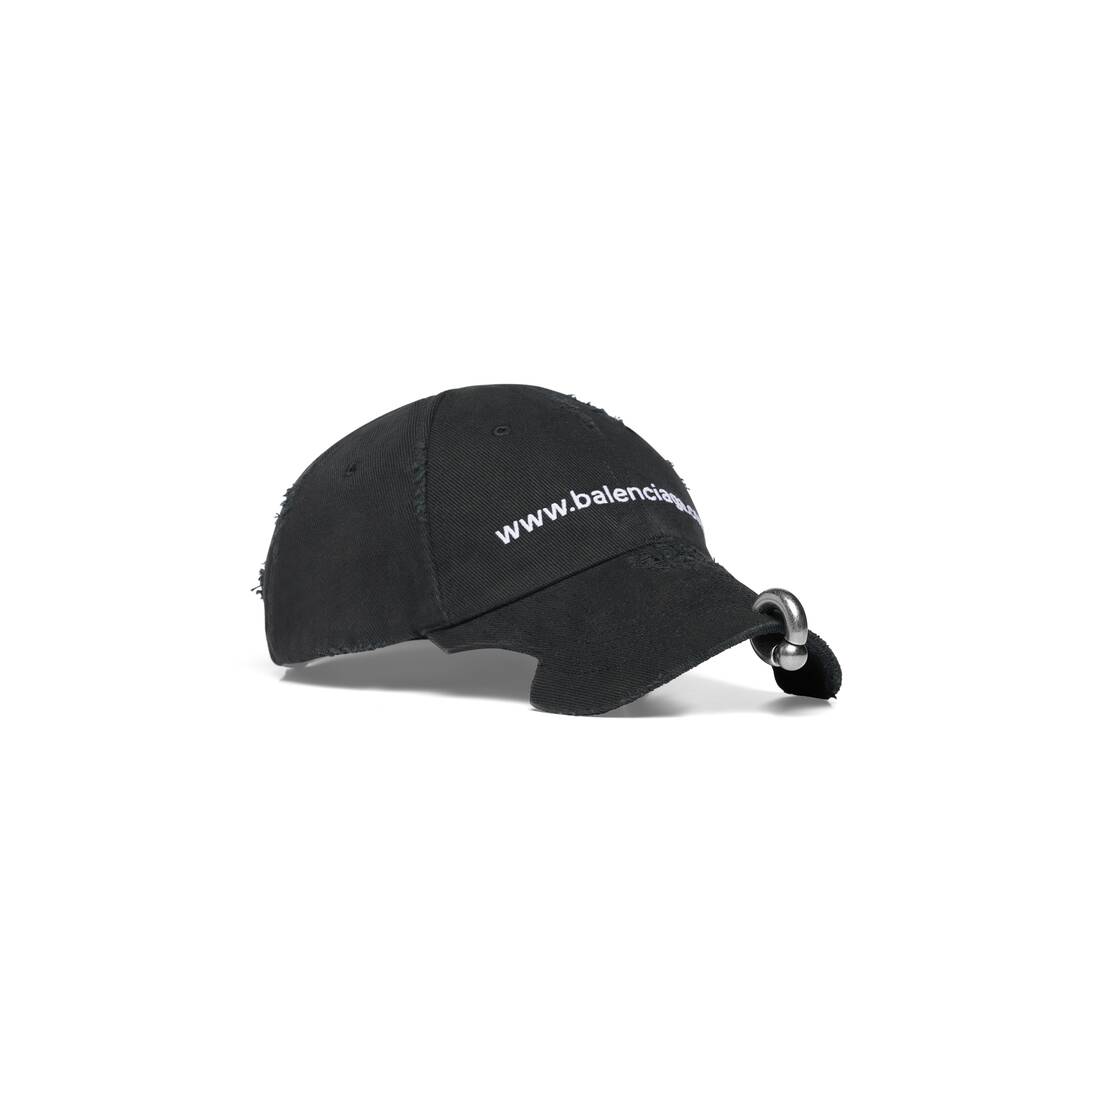 Bal.com Front Piercing Cap in Black Faded | Balenciaga US